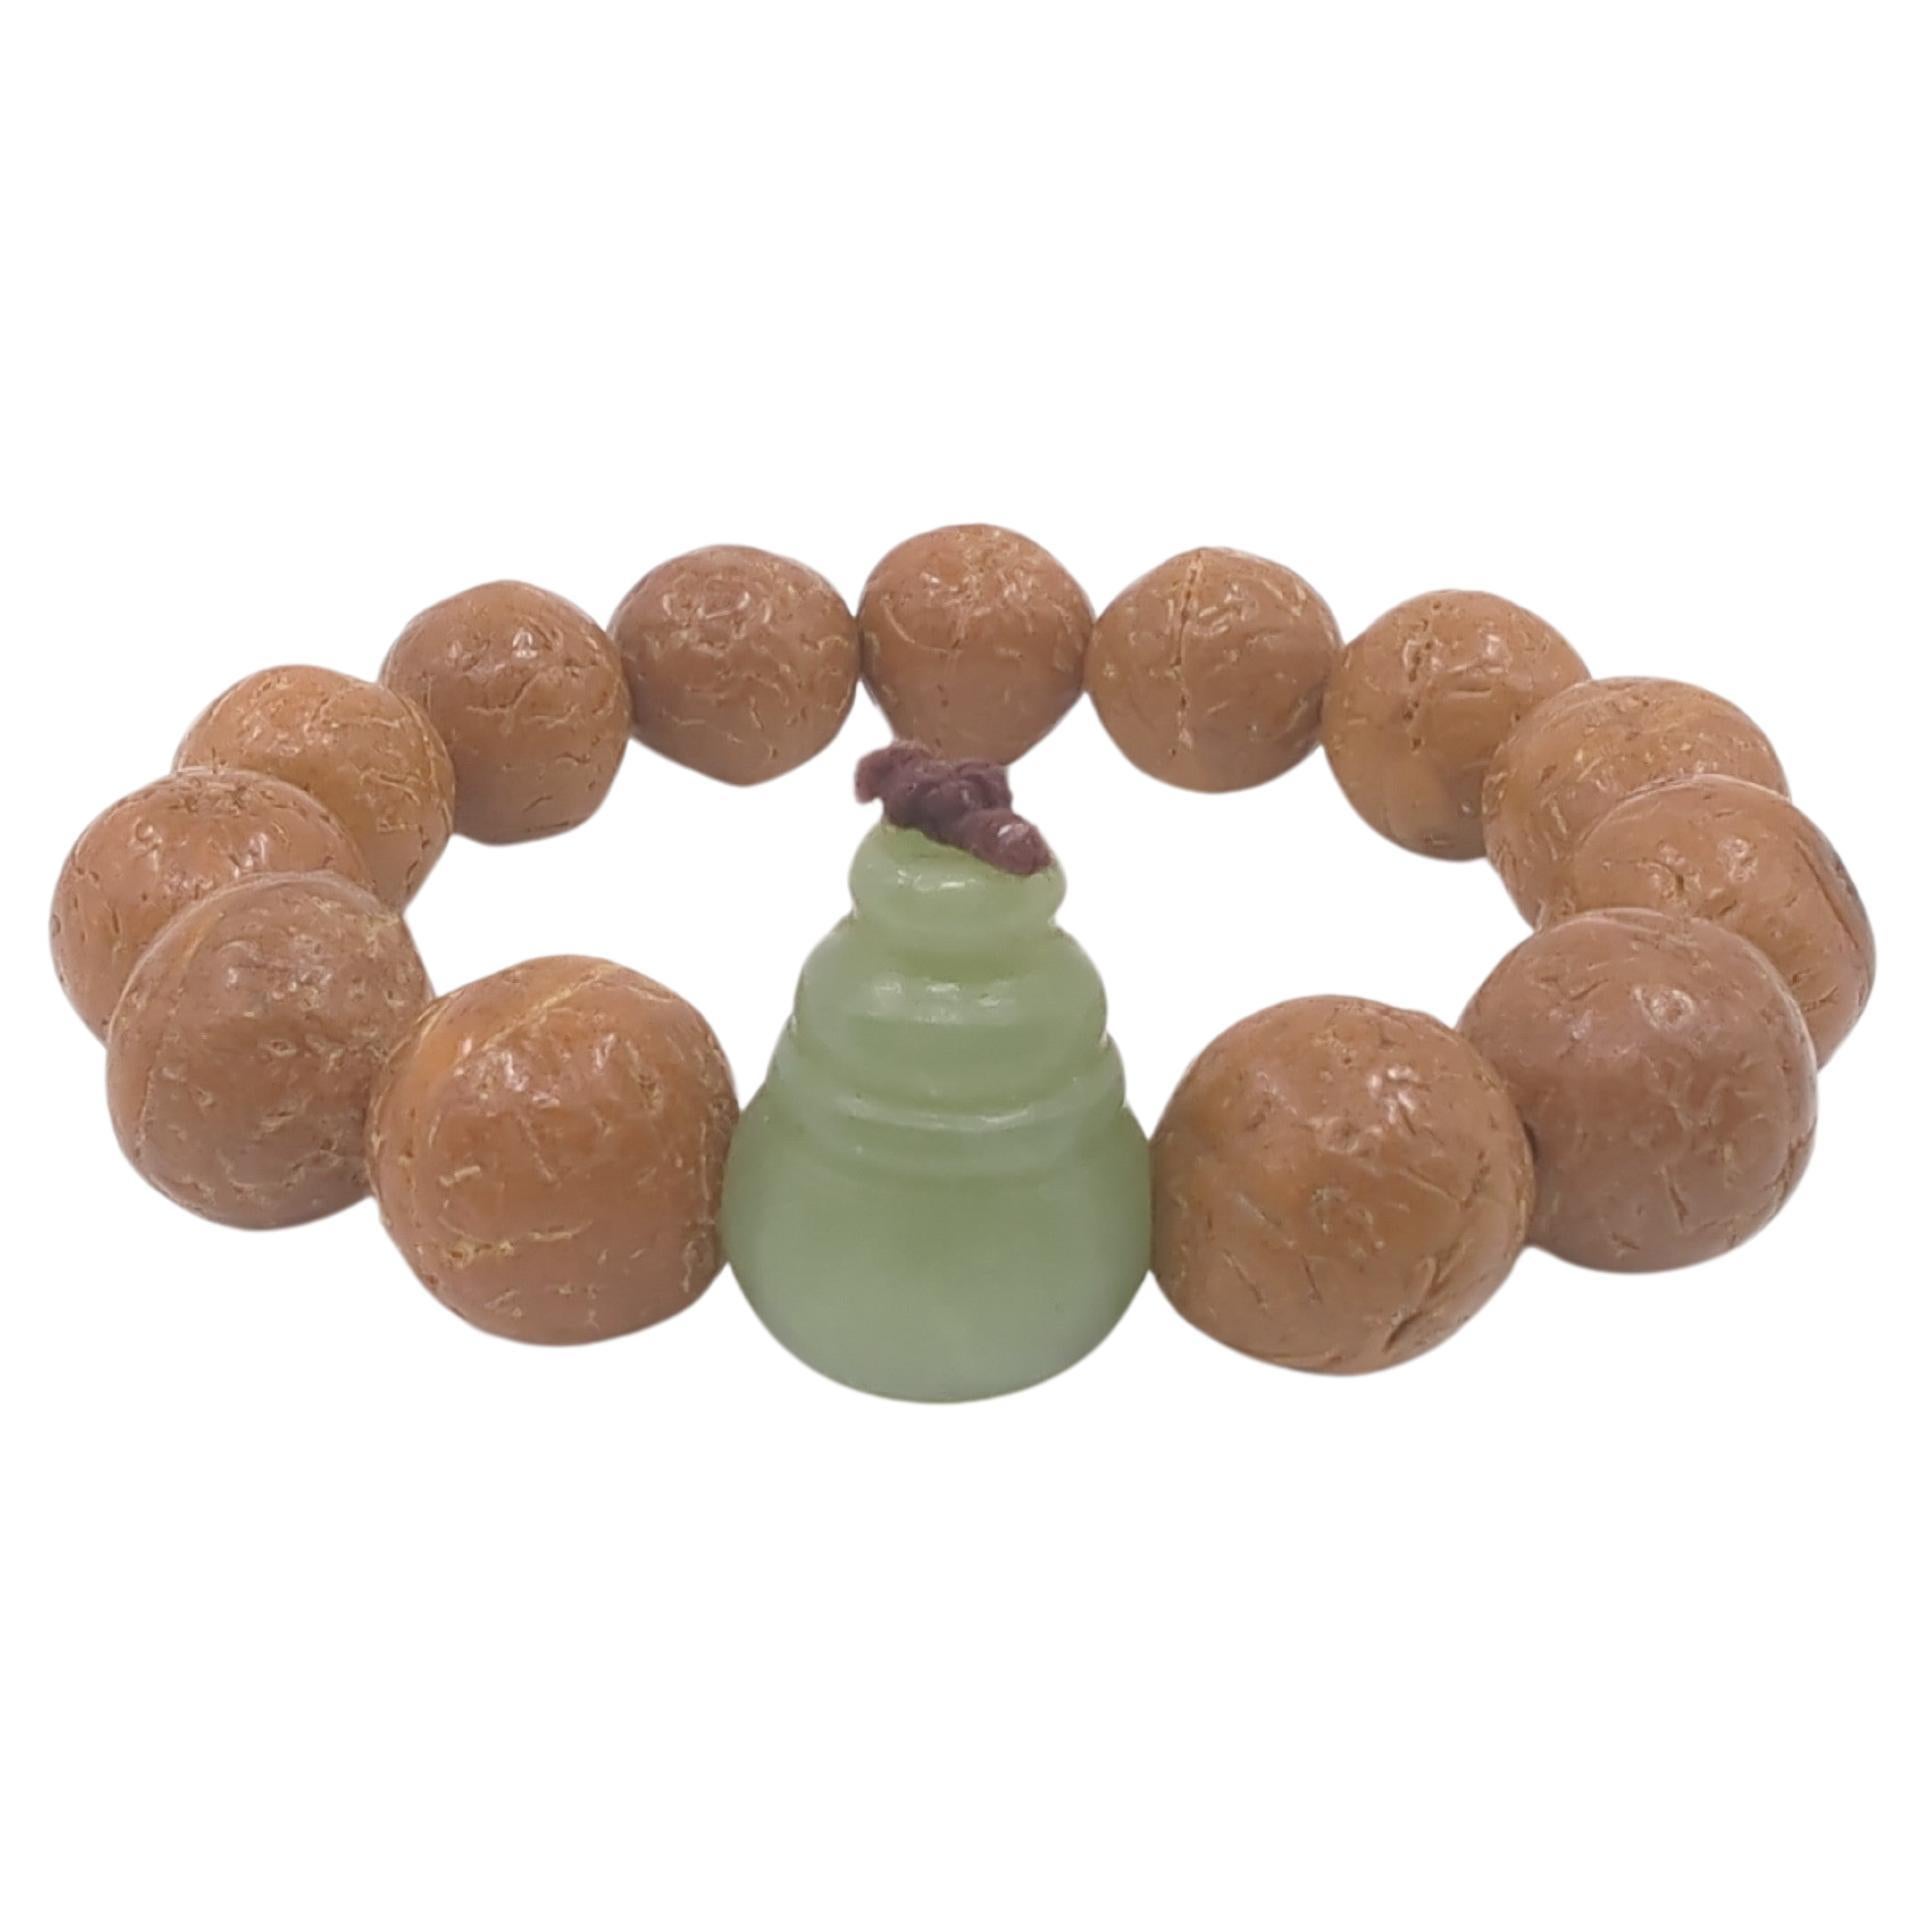 Antique Chinese Celadon Jade Hulu Bead Bodhi Seeds Bracelet - BEAUTIFUL PATINA For Sale 1